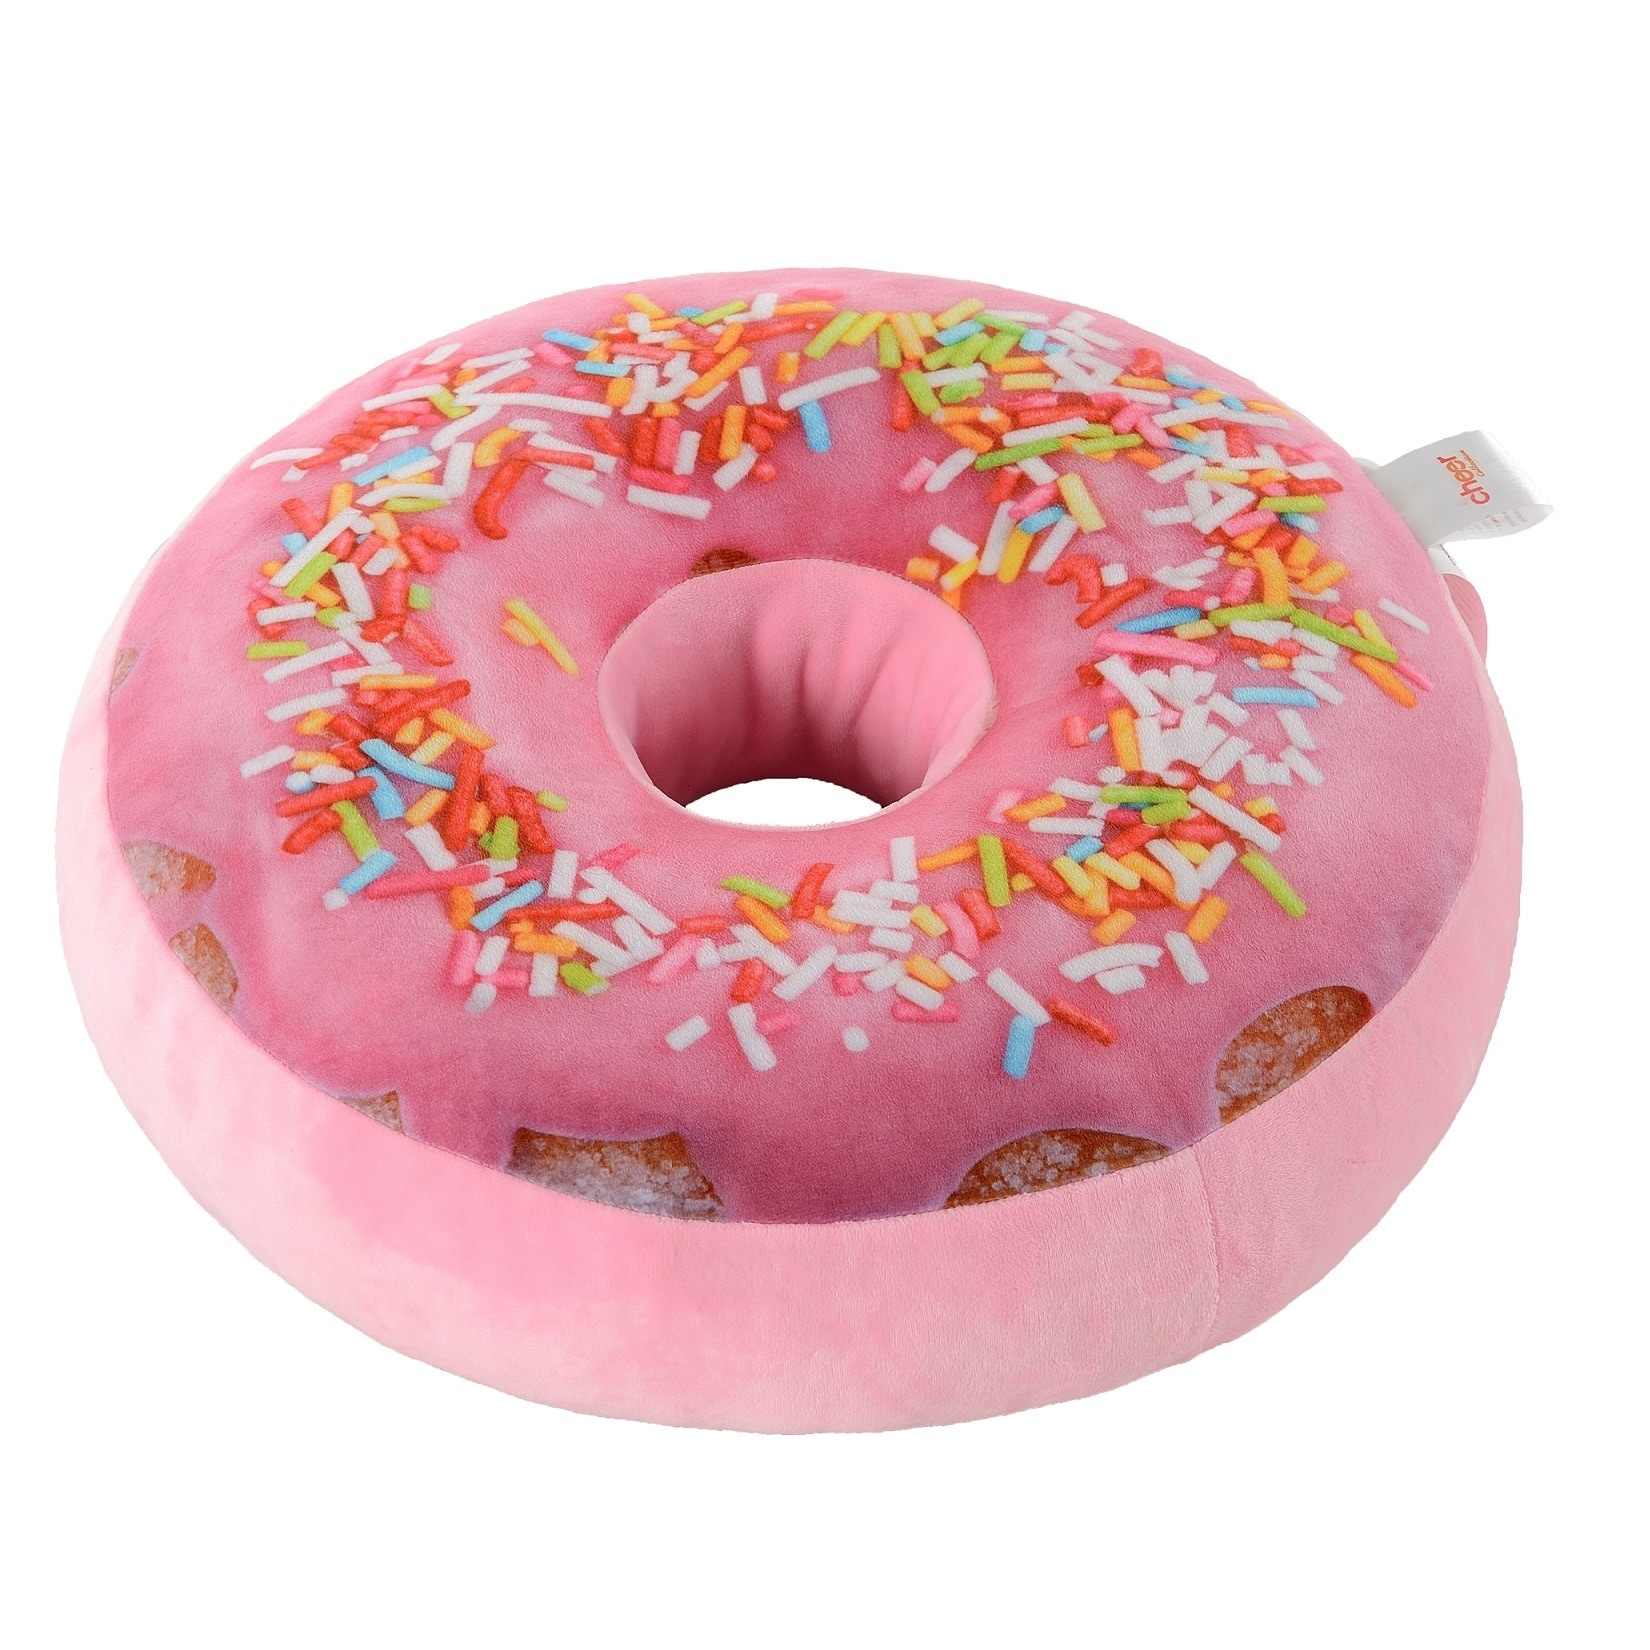 https://ak1.ostkcdn.com/images/products/16696244/Cheer-Collection-Reversible-Plush-Donut-Throw-Pillow-535e3dc7-c2a2-4b5f-900b-e2c0d22f7faa.jpg